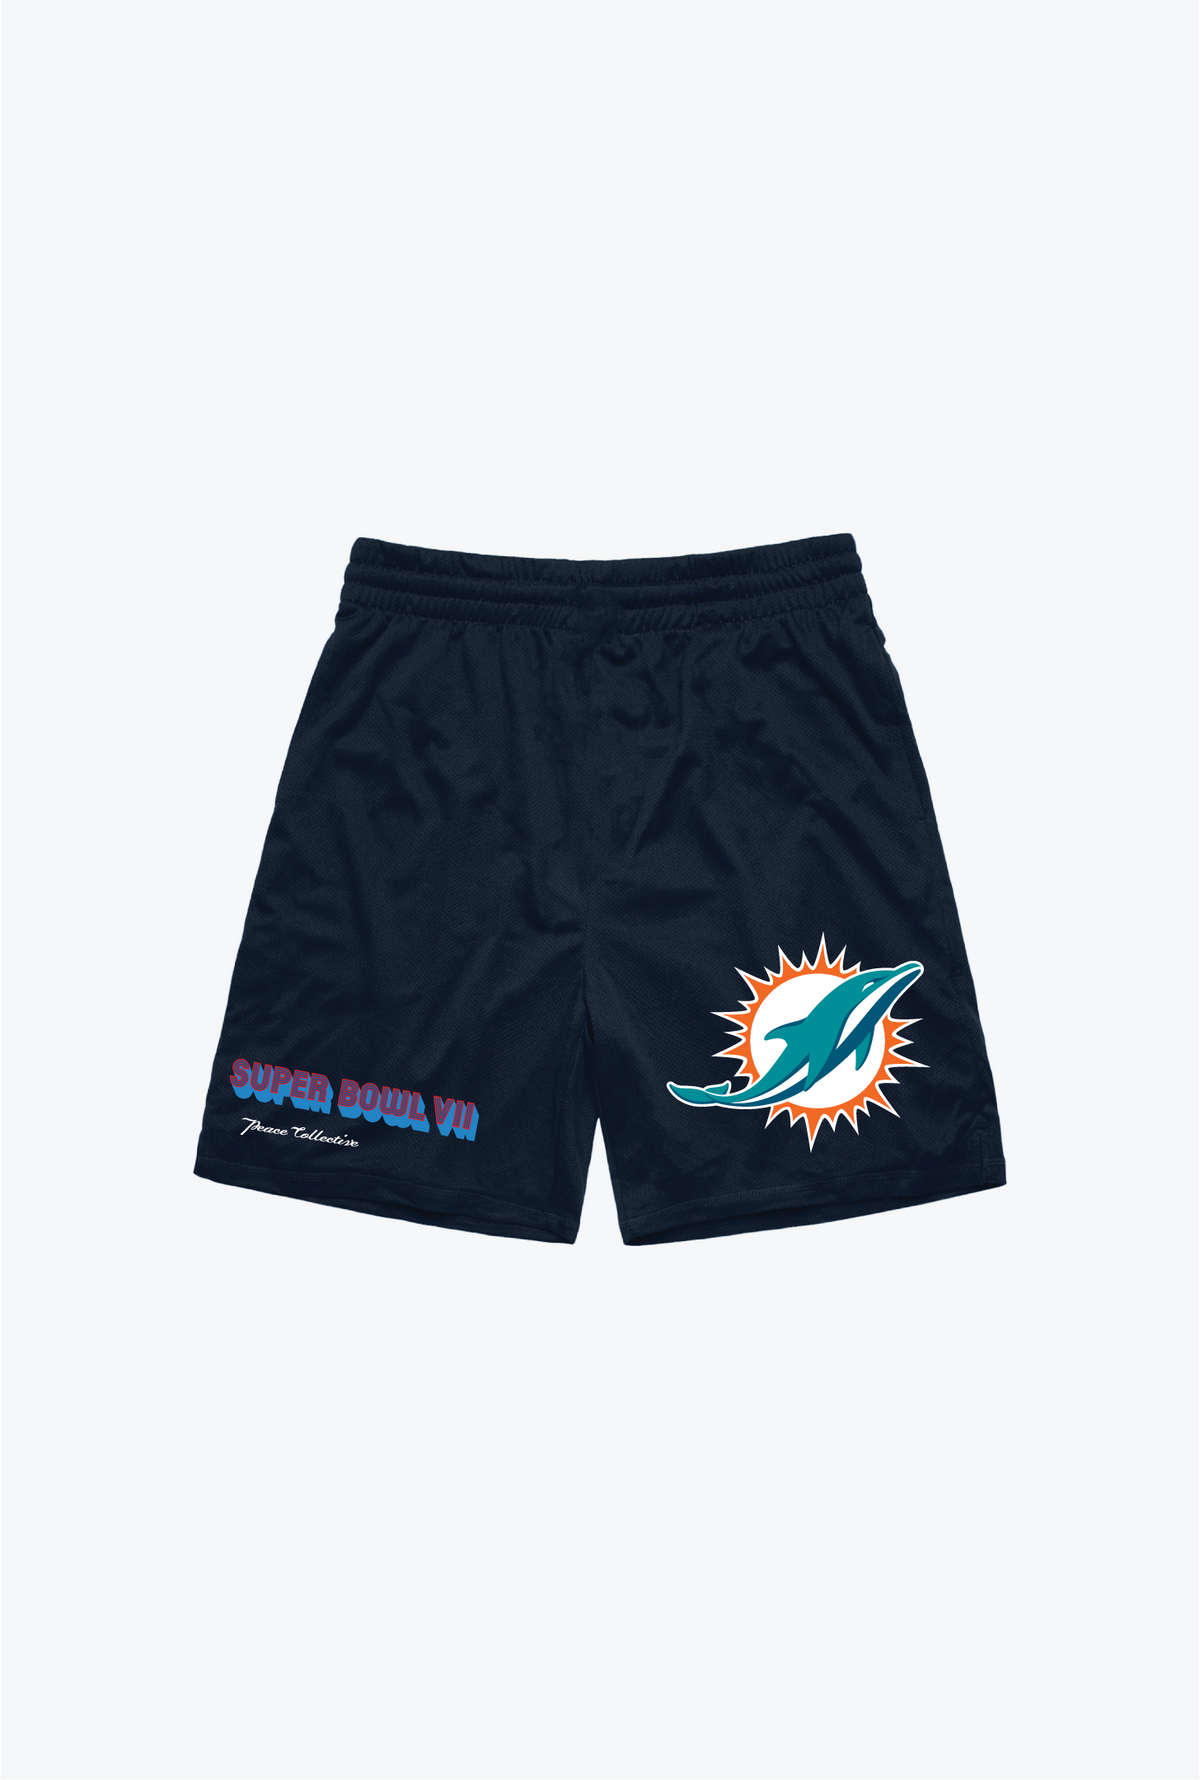 Miami Dolphins Mesh Shorts - Black